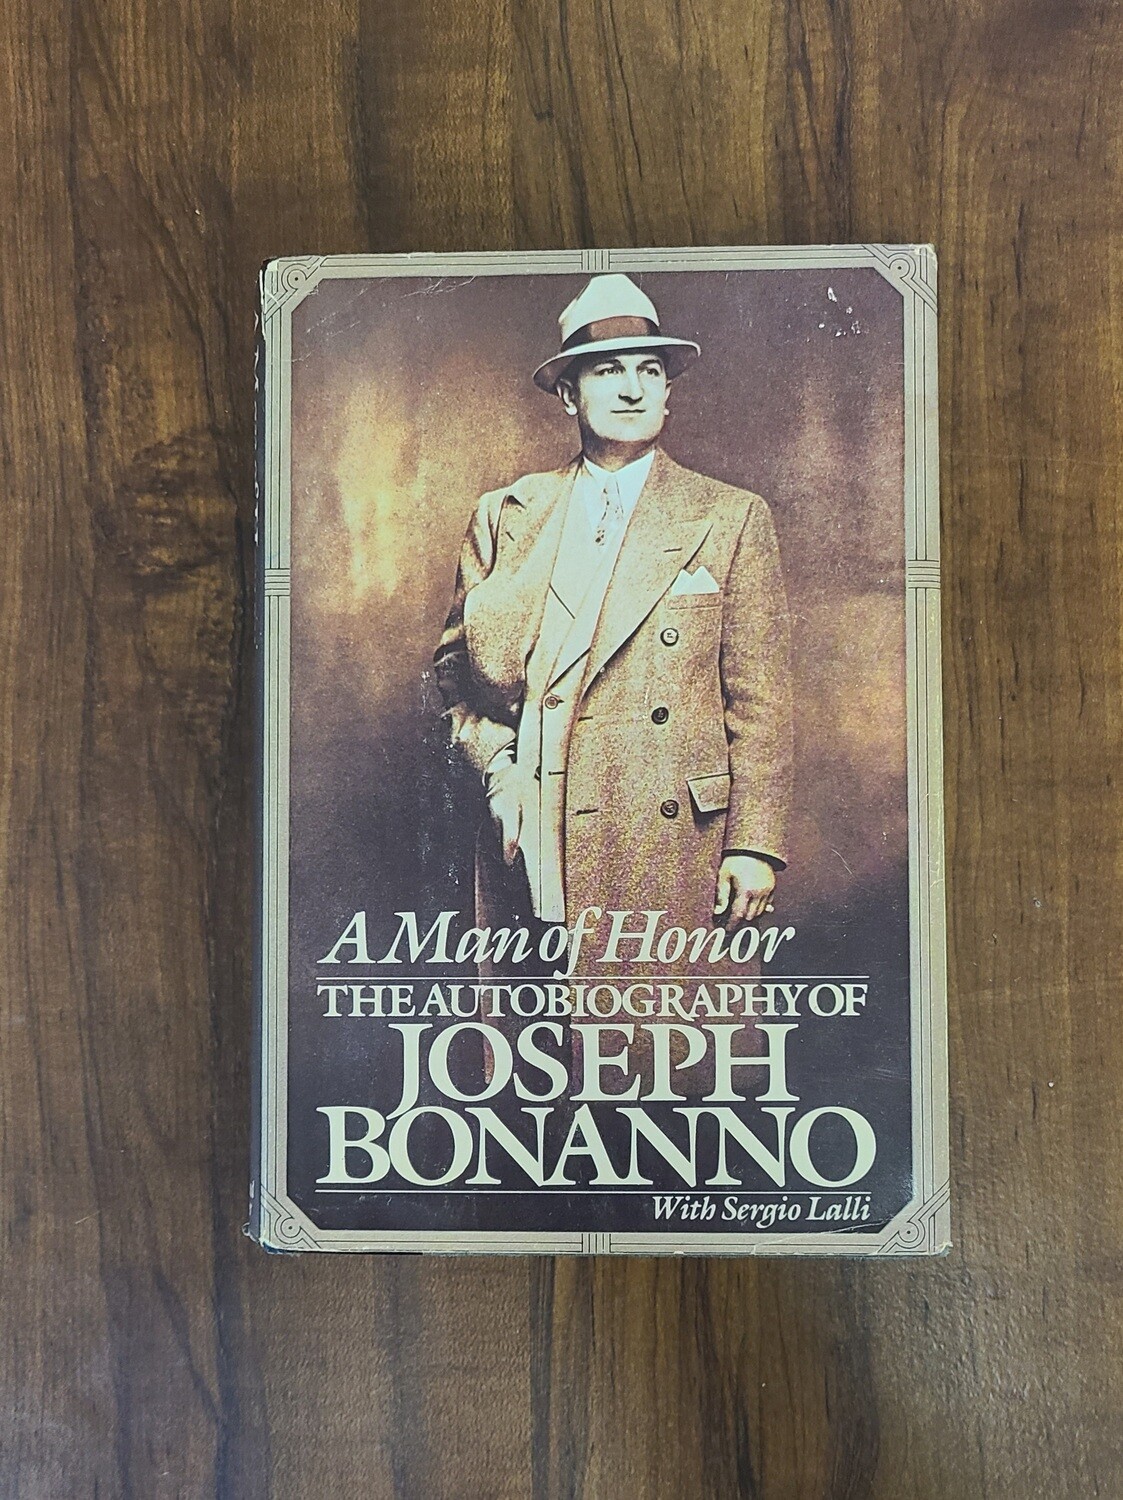 A Man of Honor by Joseph Bonanno with Sergio Lalli